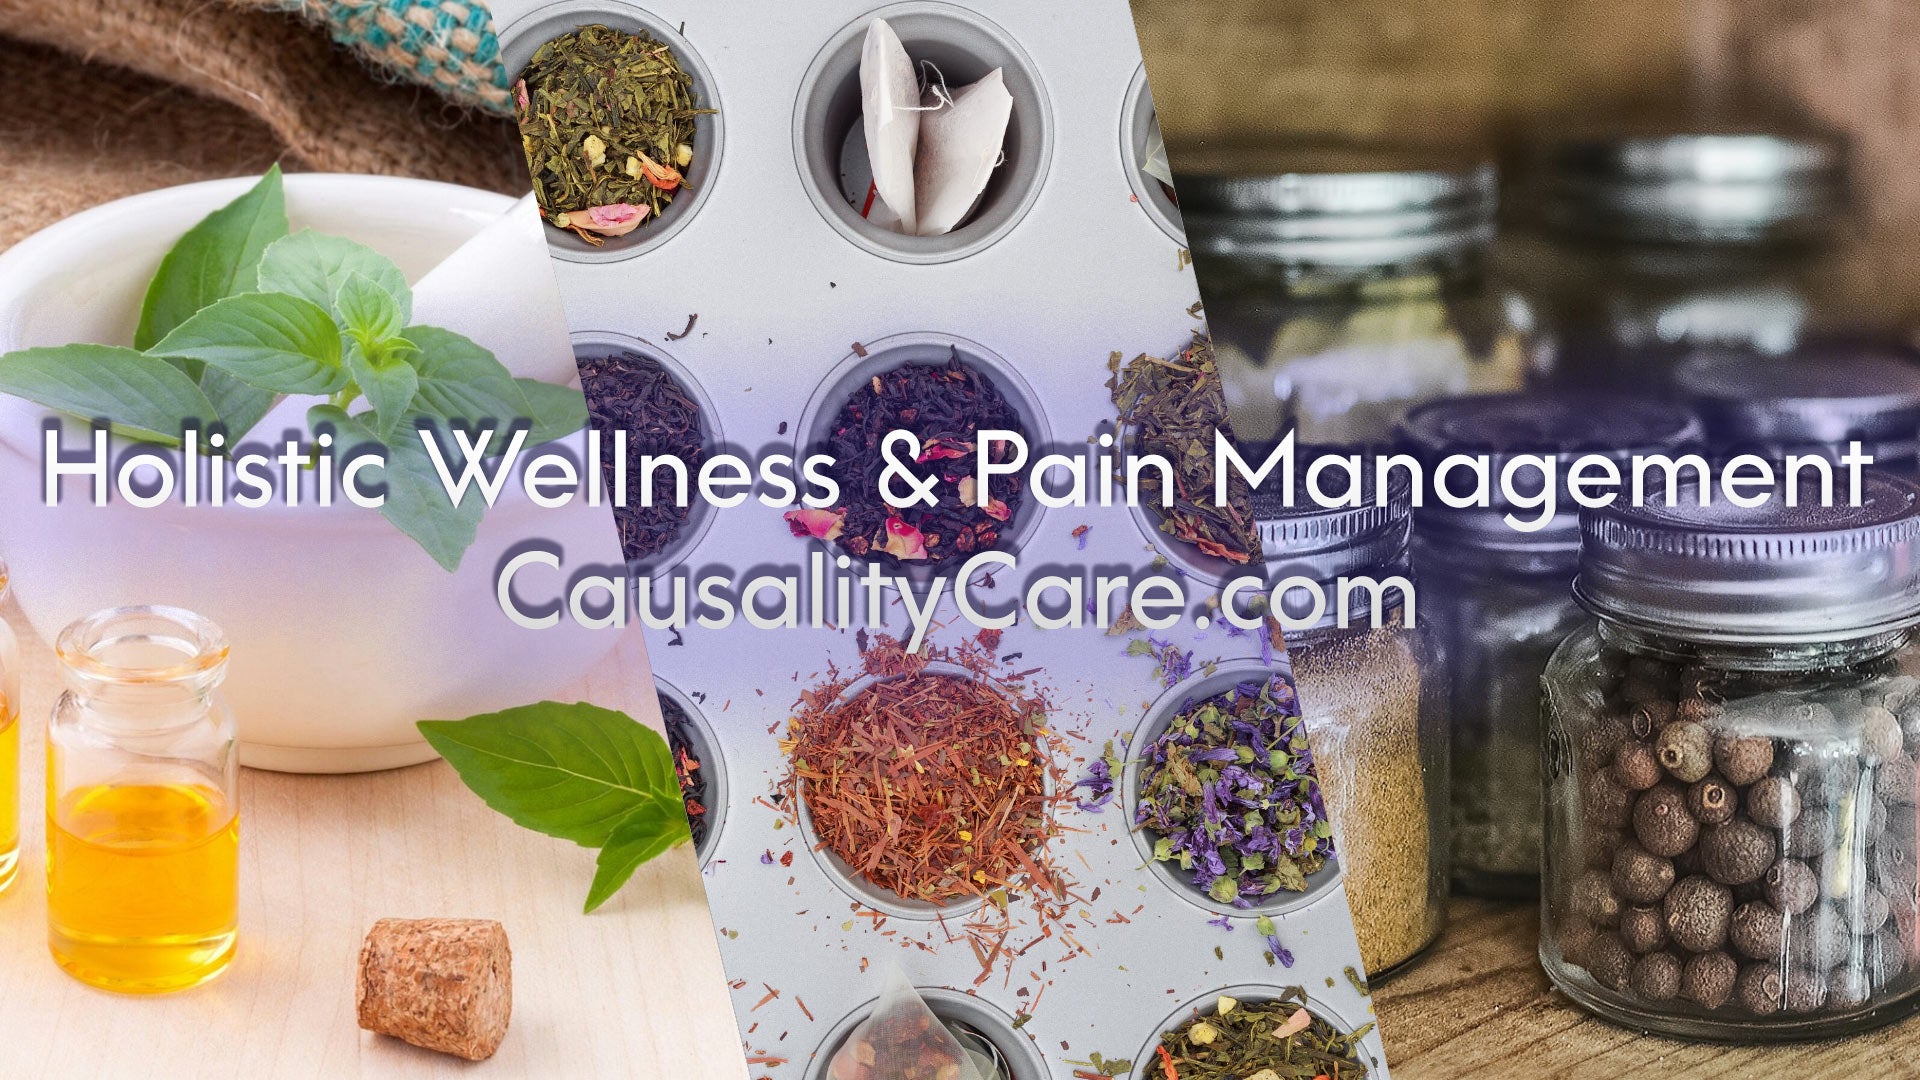 Shak's CausalityCare.com - Holistic Wellness & Pain Management - Herbal Medicine Terminology